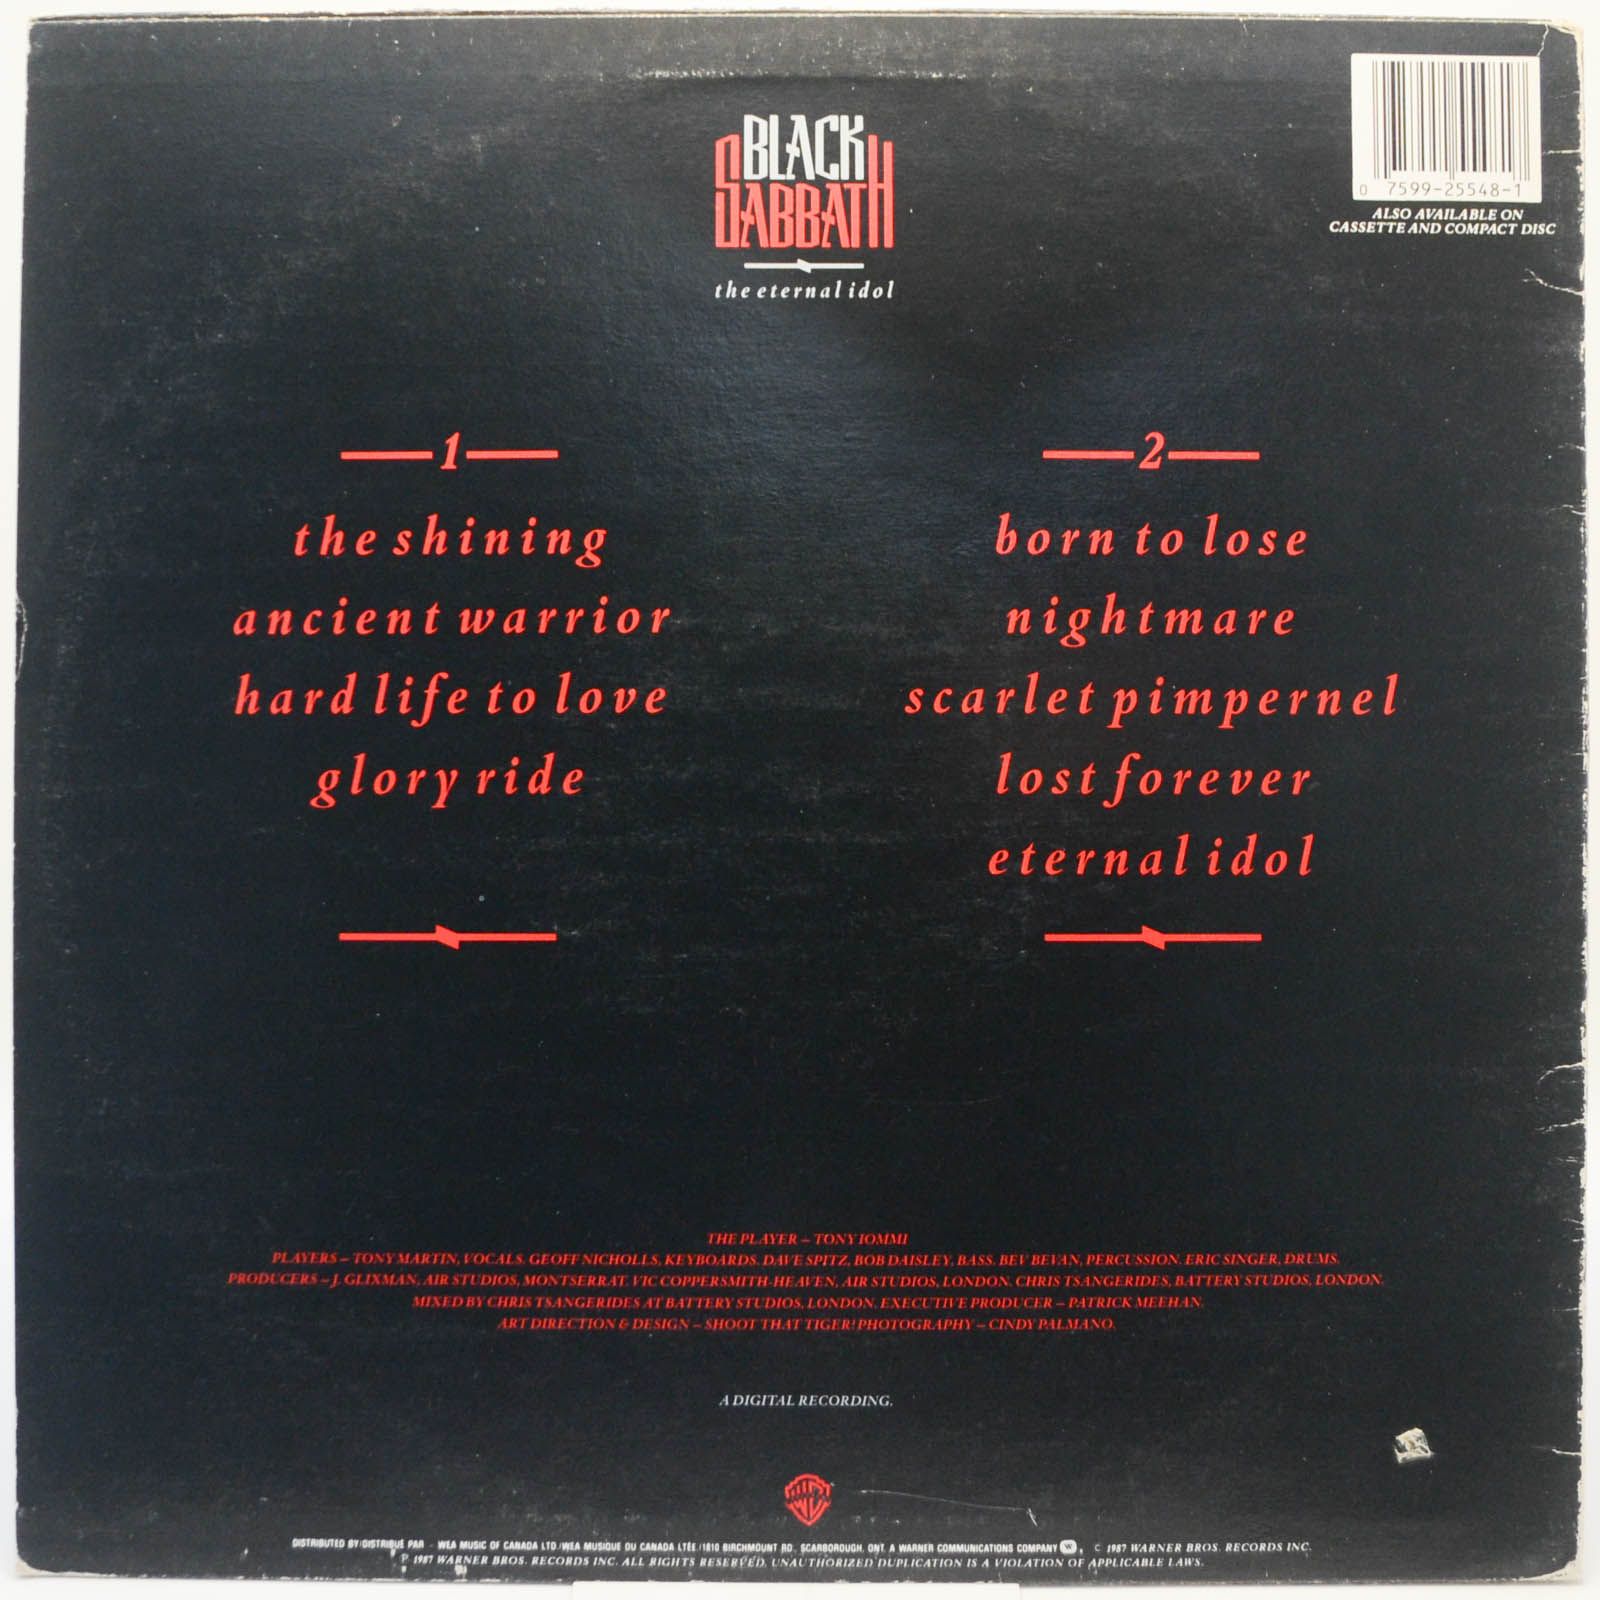 Black Sabbath — The Eternal Idol, 1987